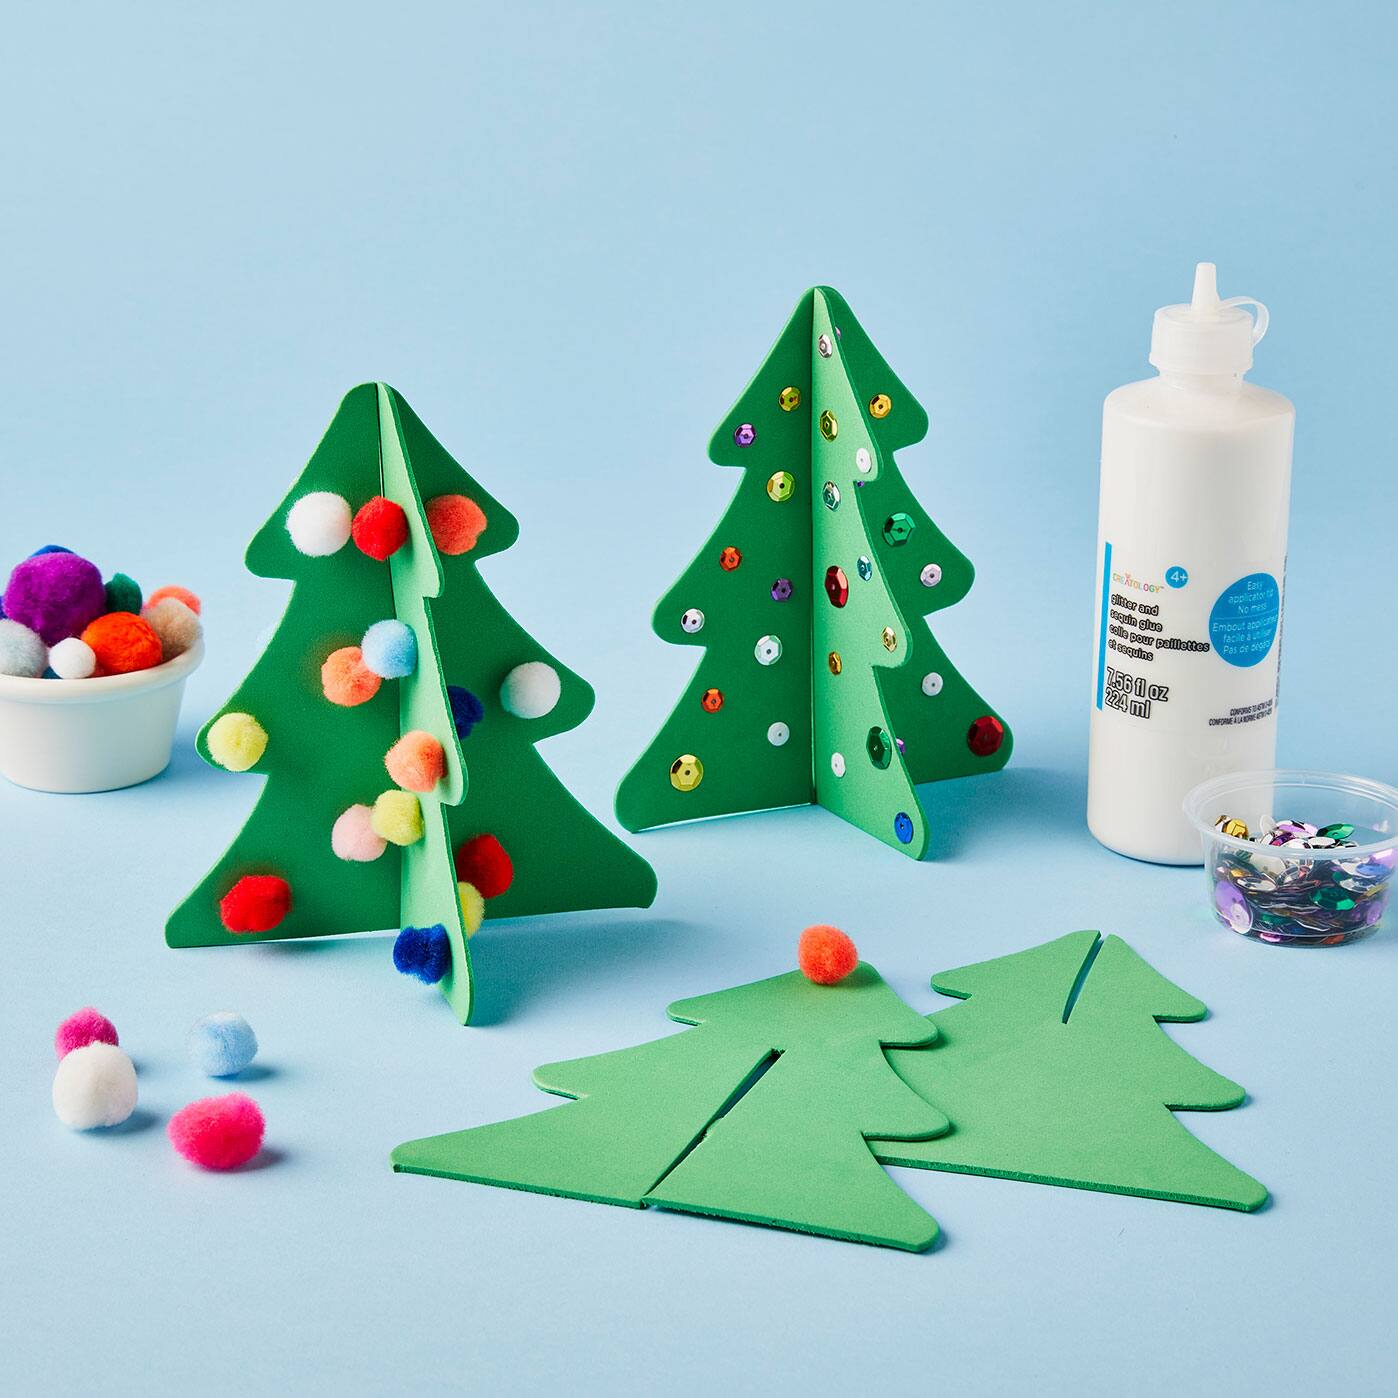 Foam Christmas Tree Ornament - Craft Project Ideas